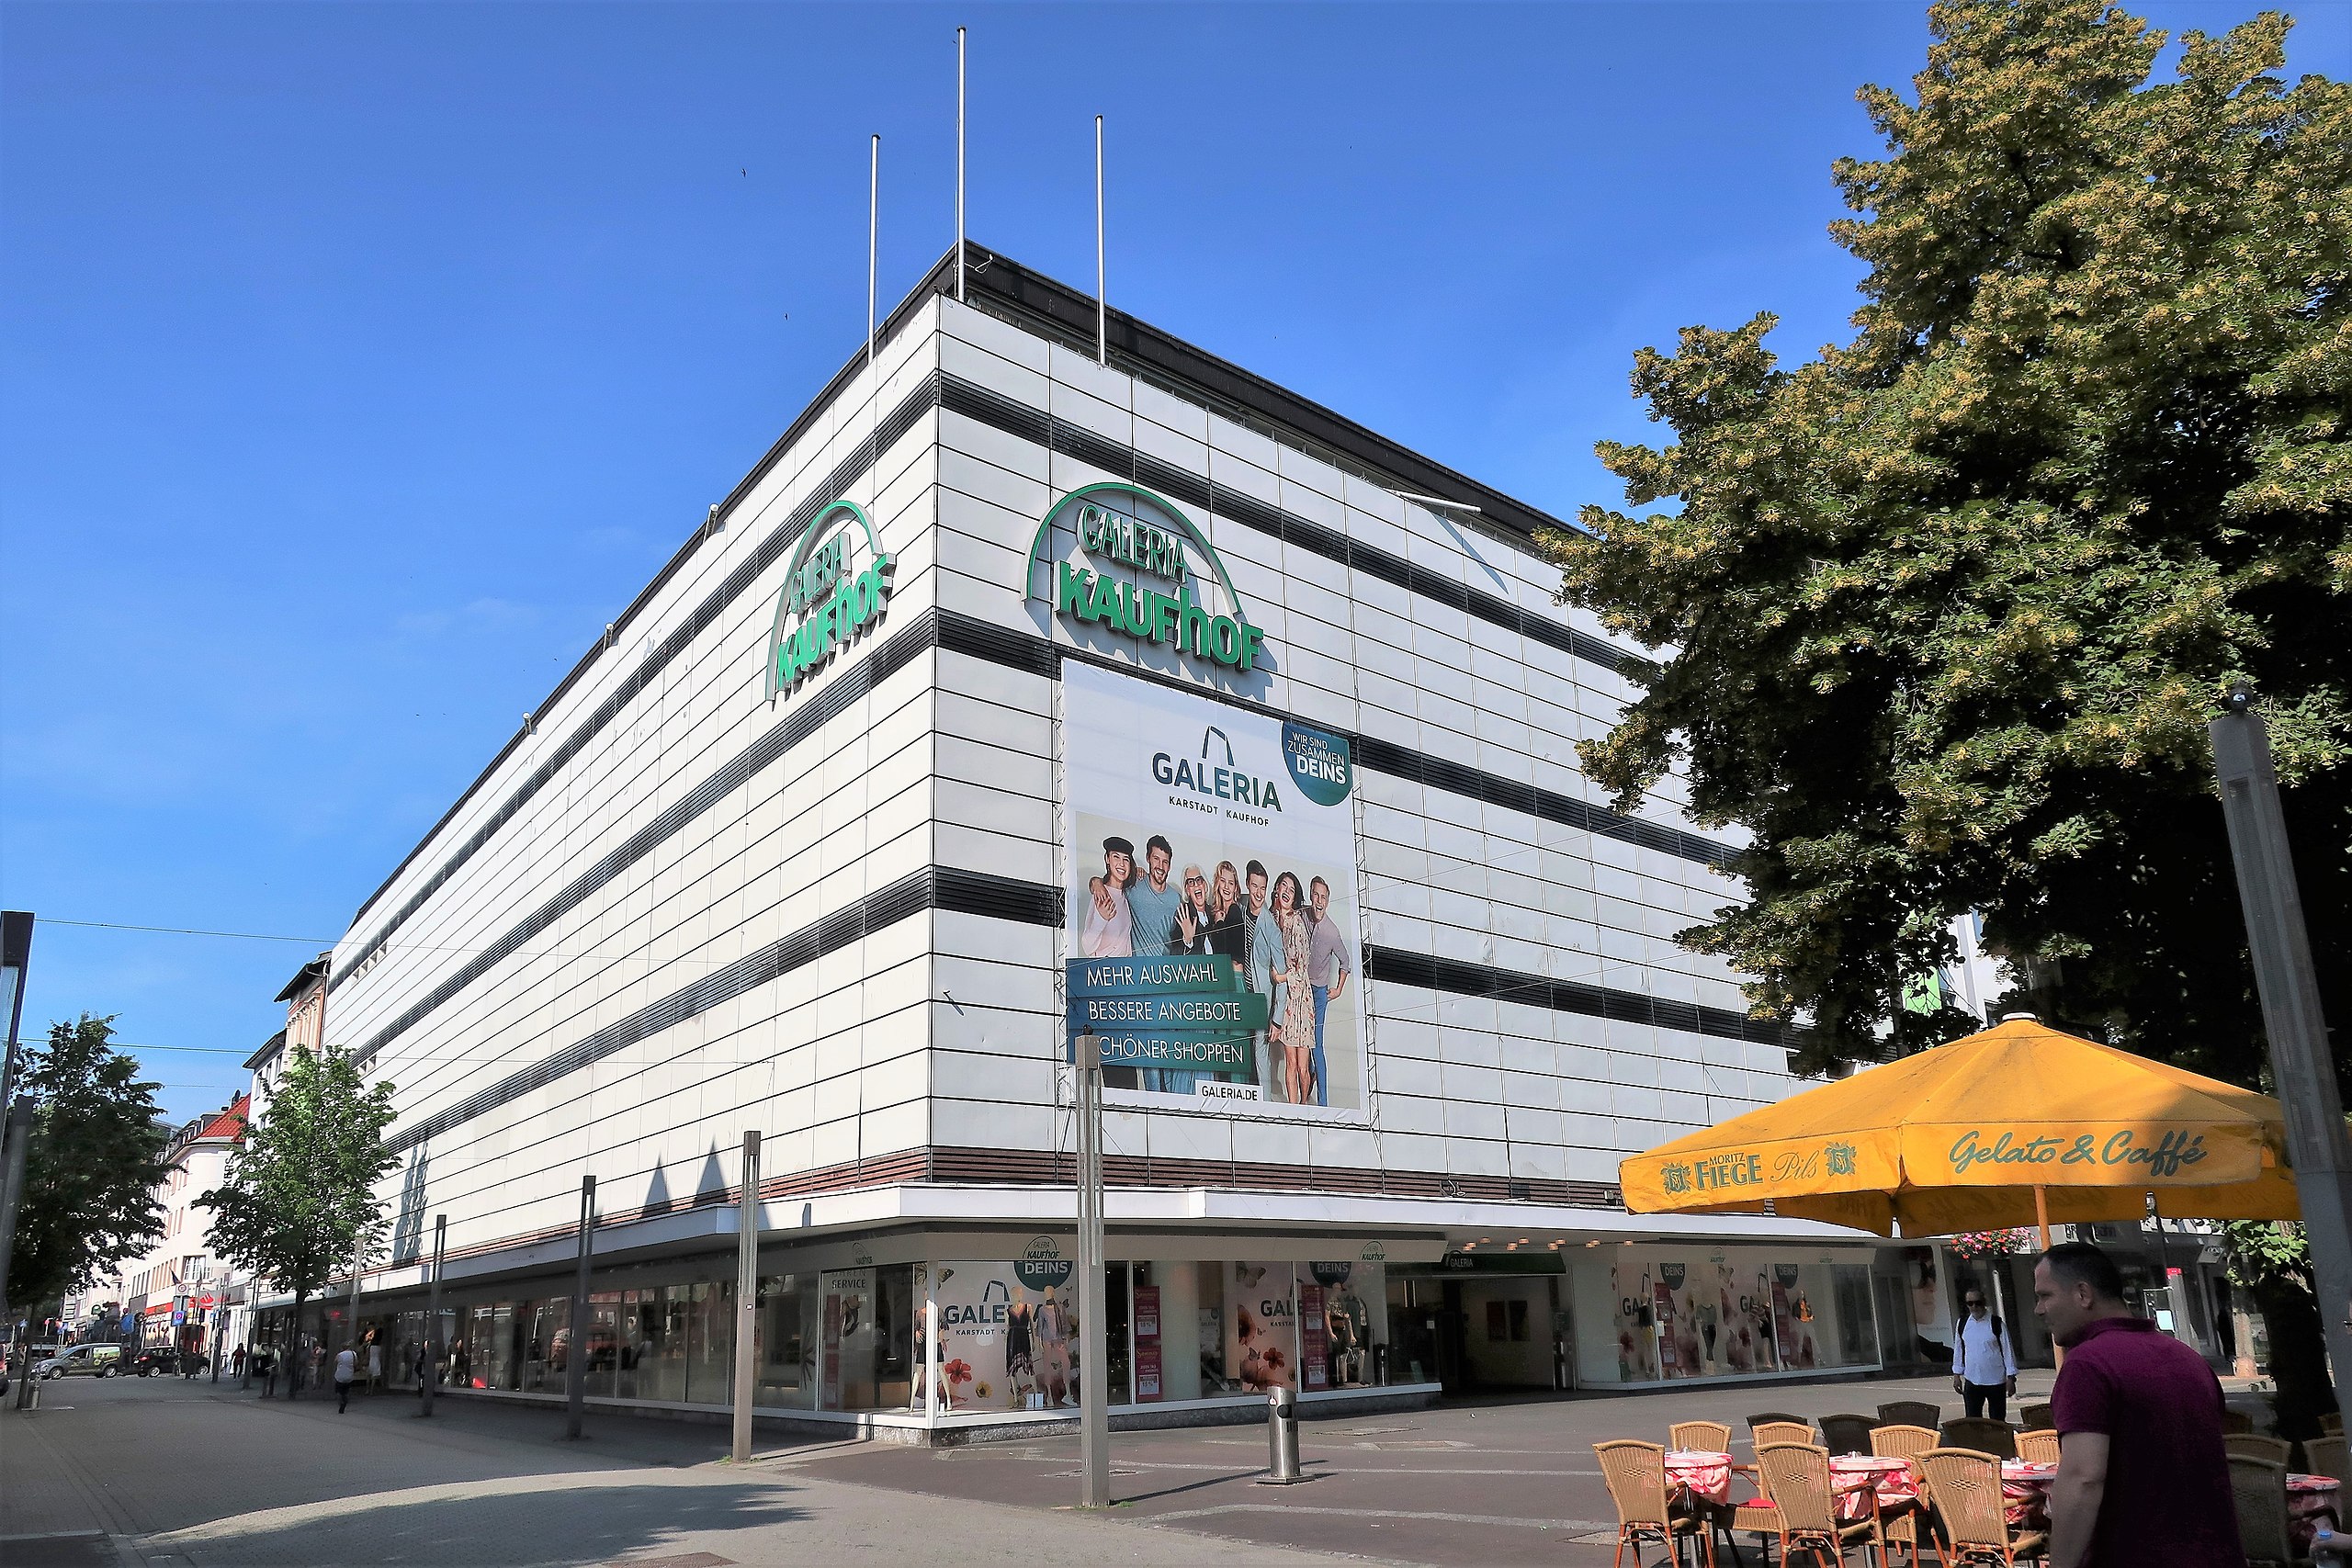 Galeria Karstadt Kaufhof - Wikipedia